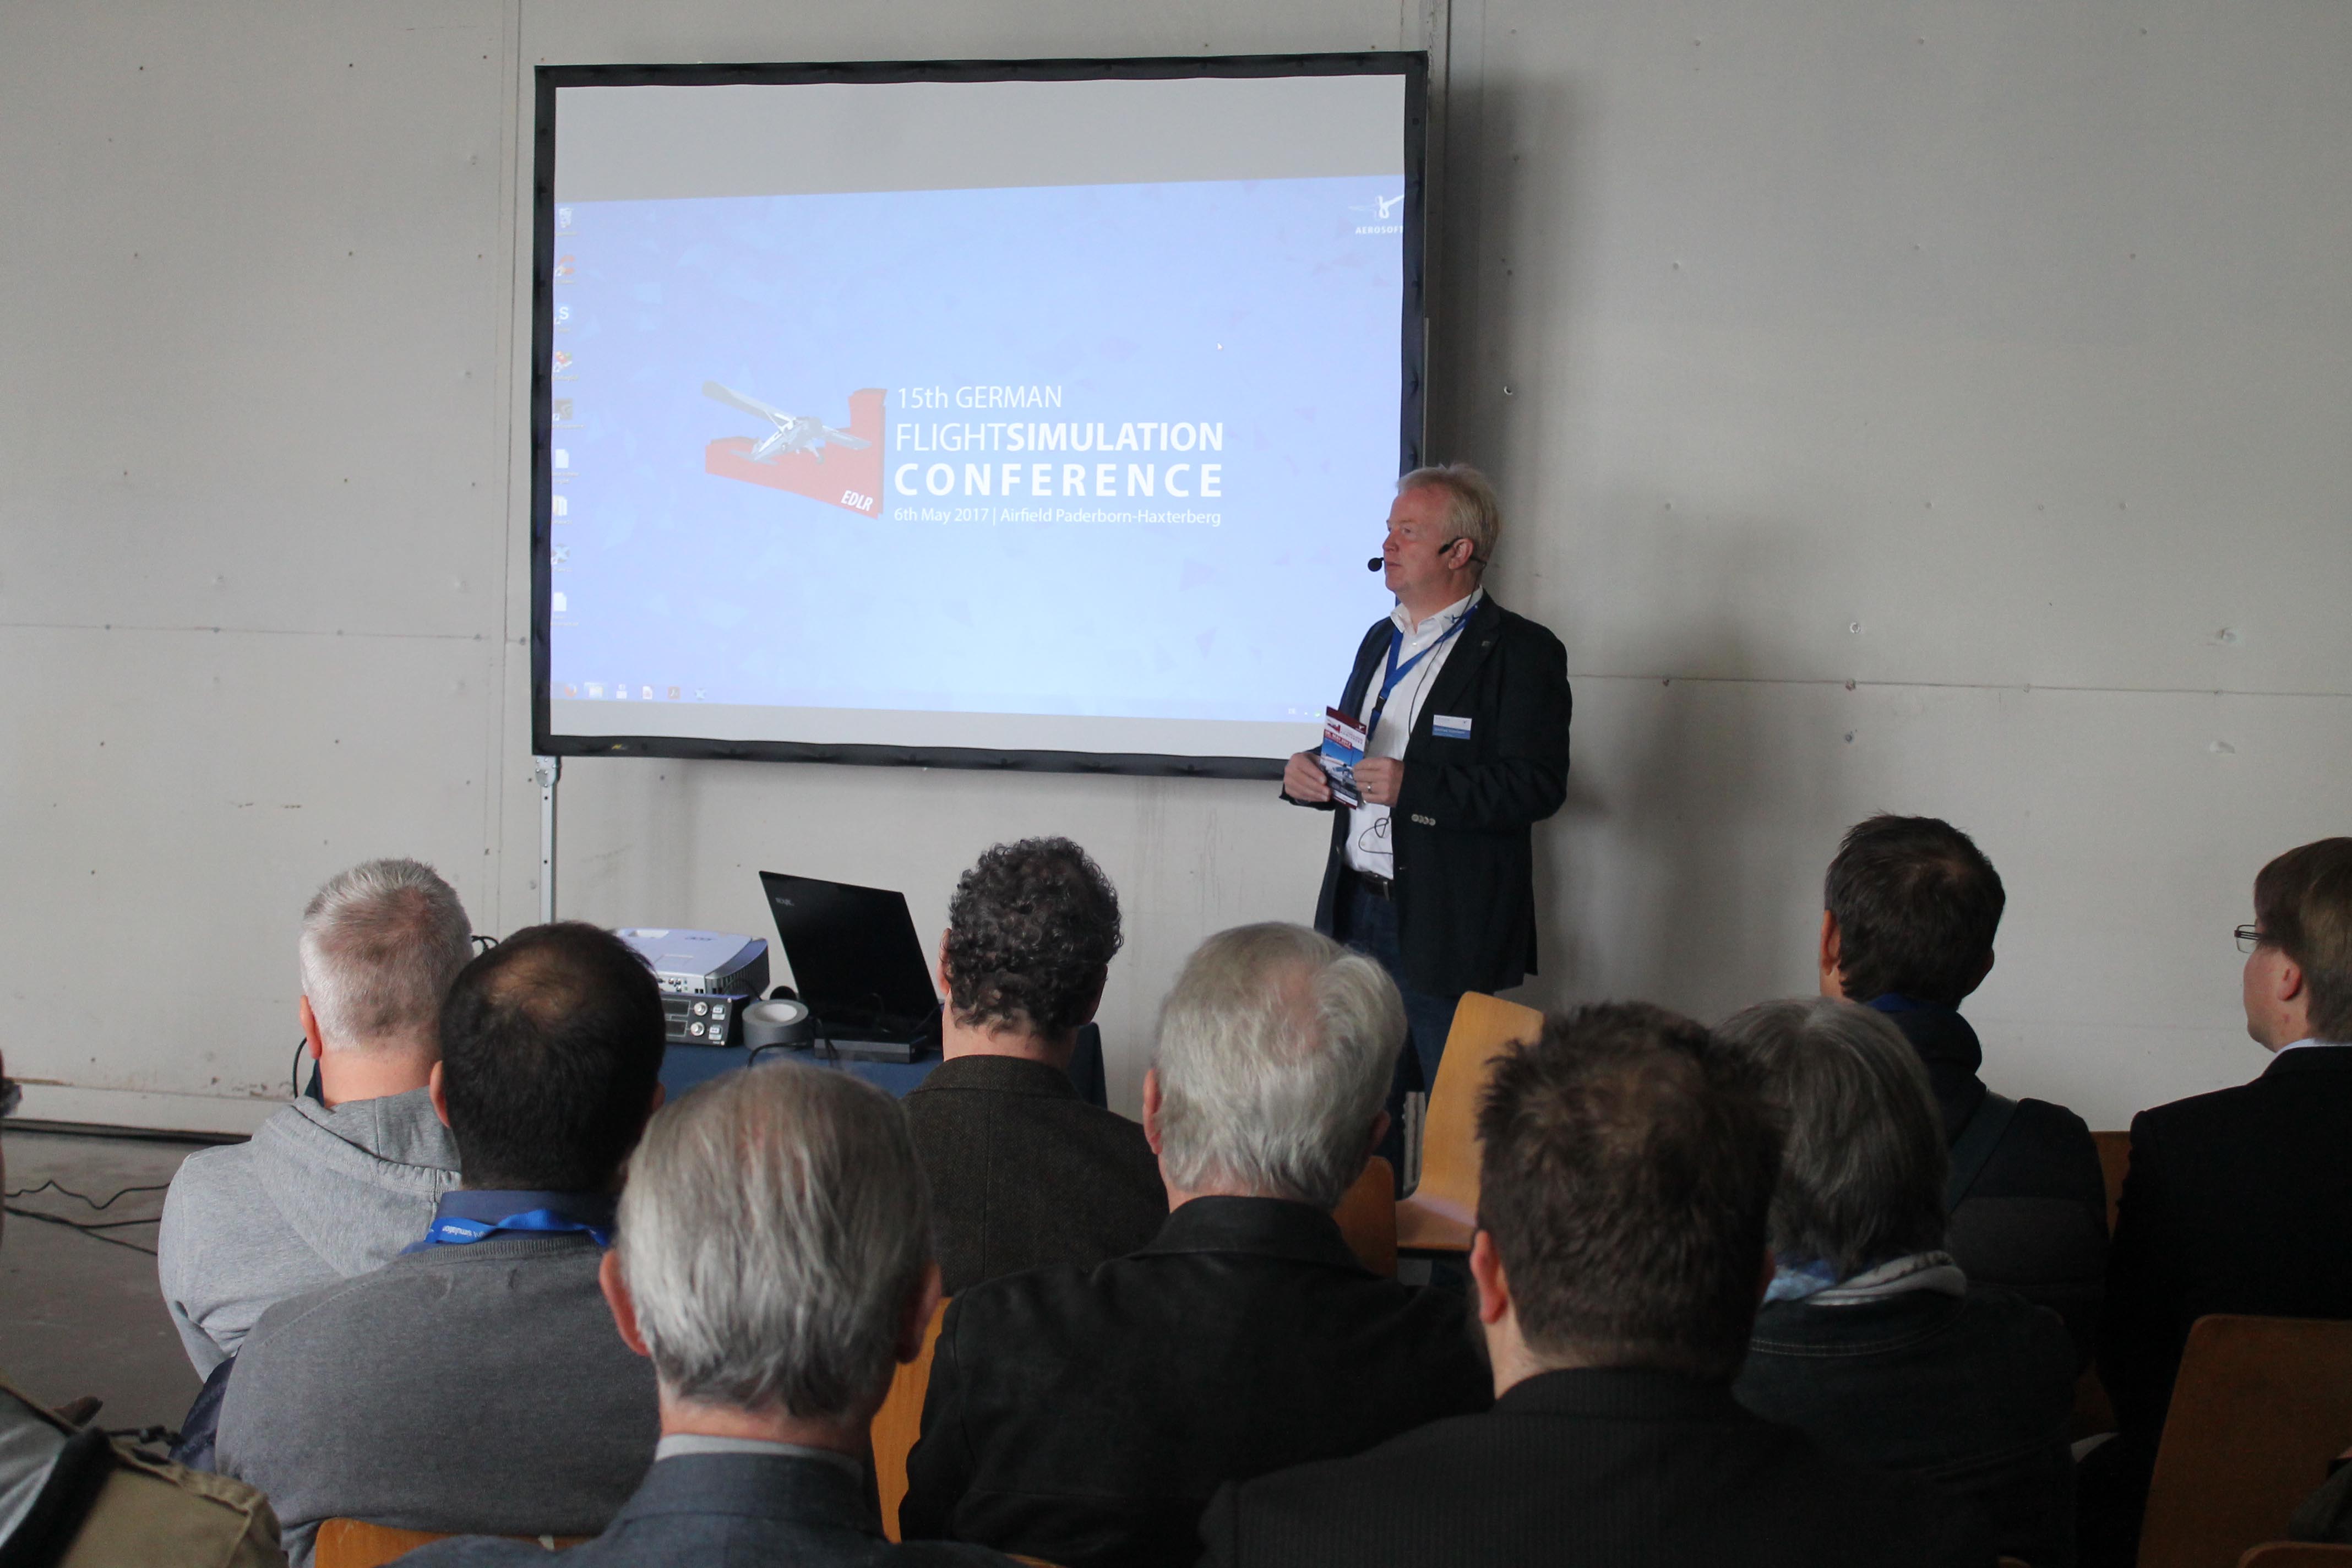 Successful conference debut at Haxterberg Airfield, Aerosoft GmbH